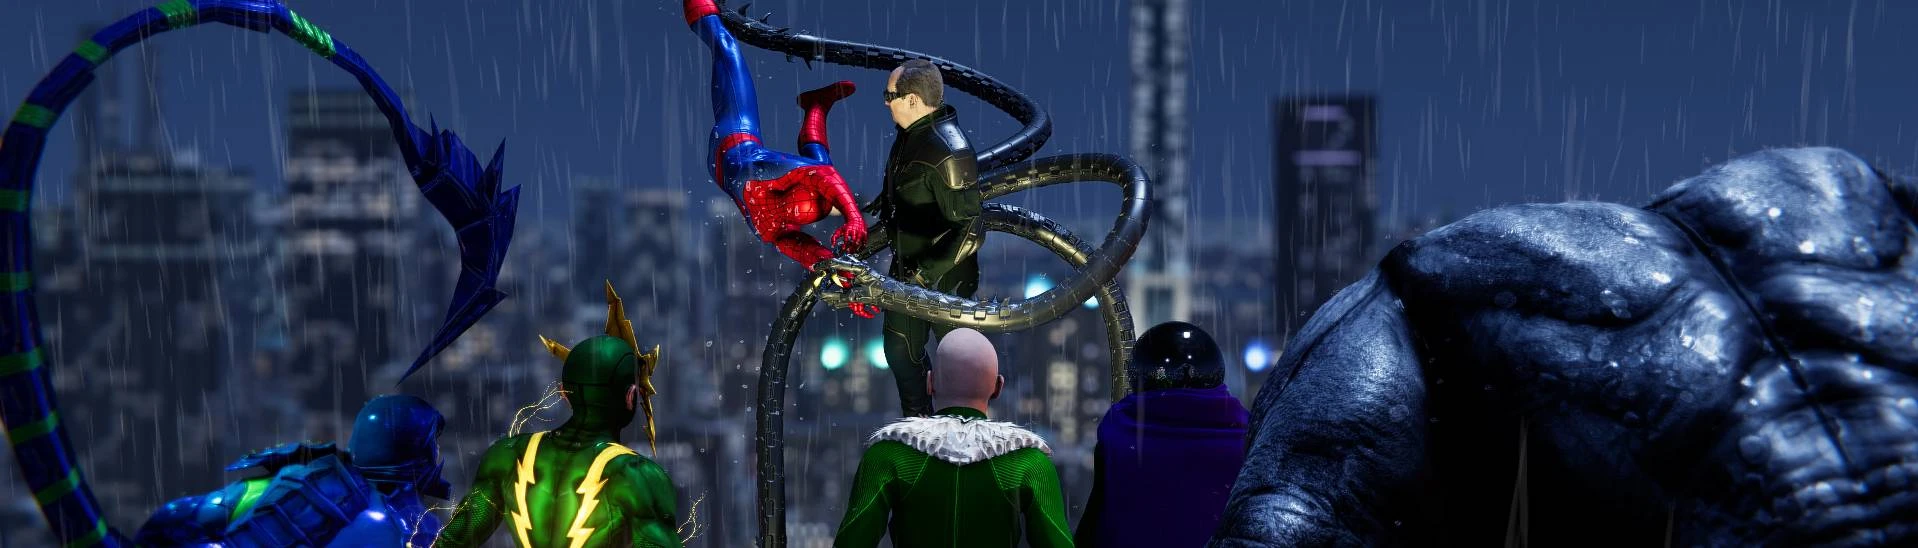 Classic Villains Pack P1 - The Shocker - Spider-Man Remastered